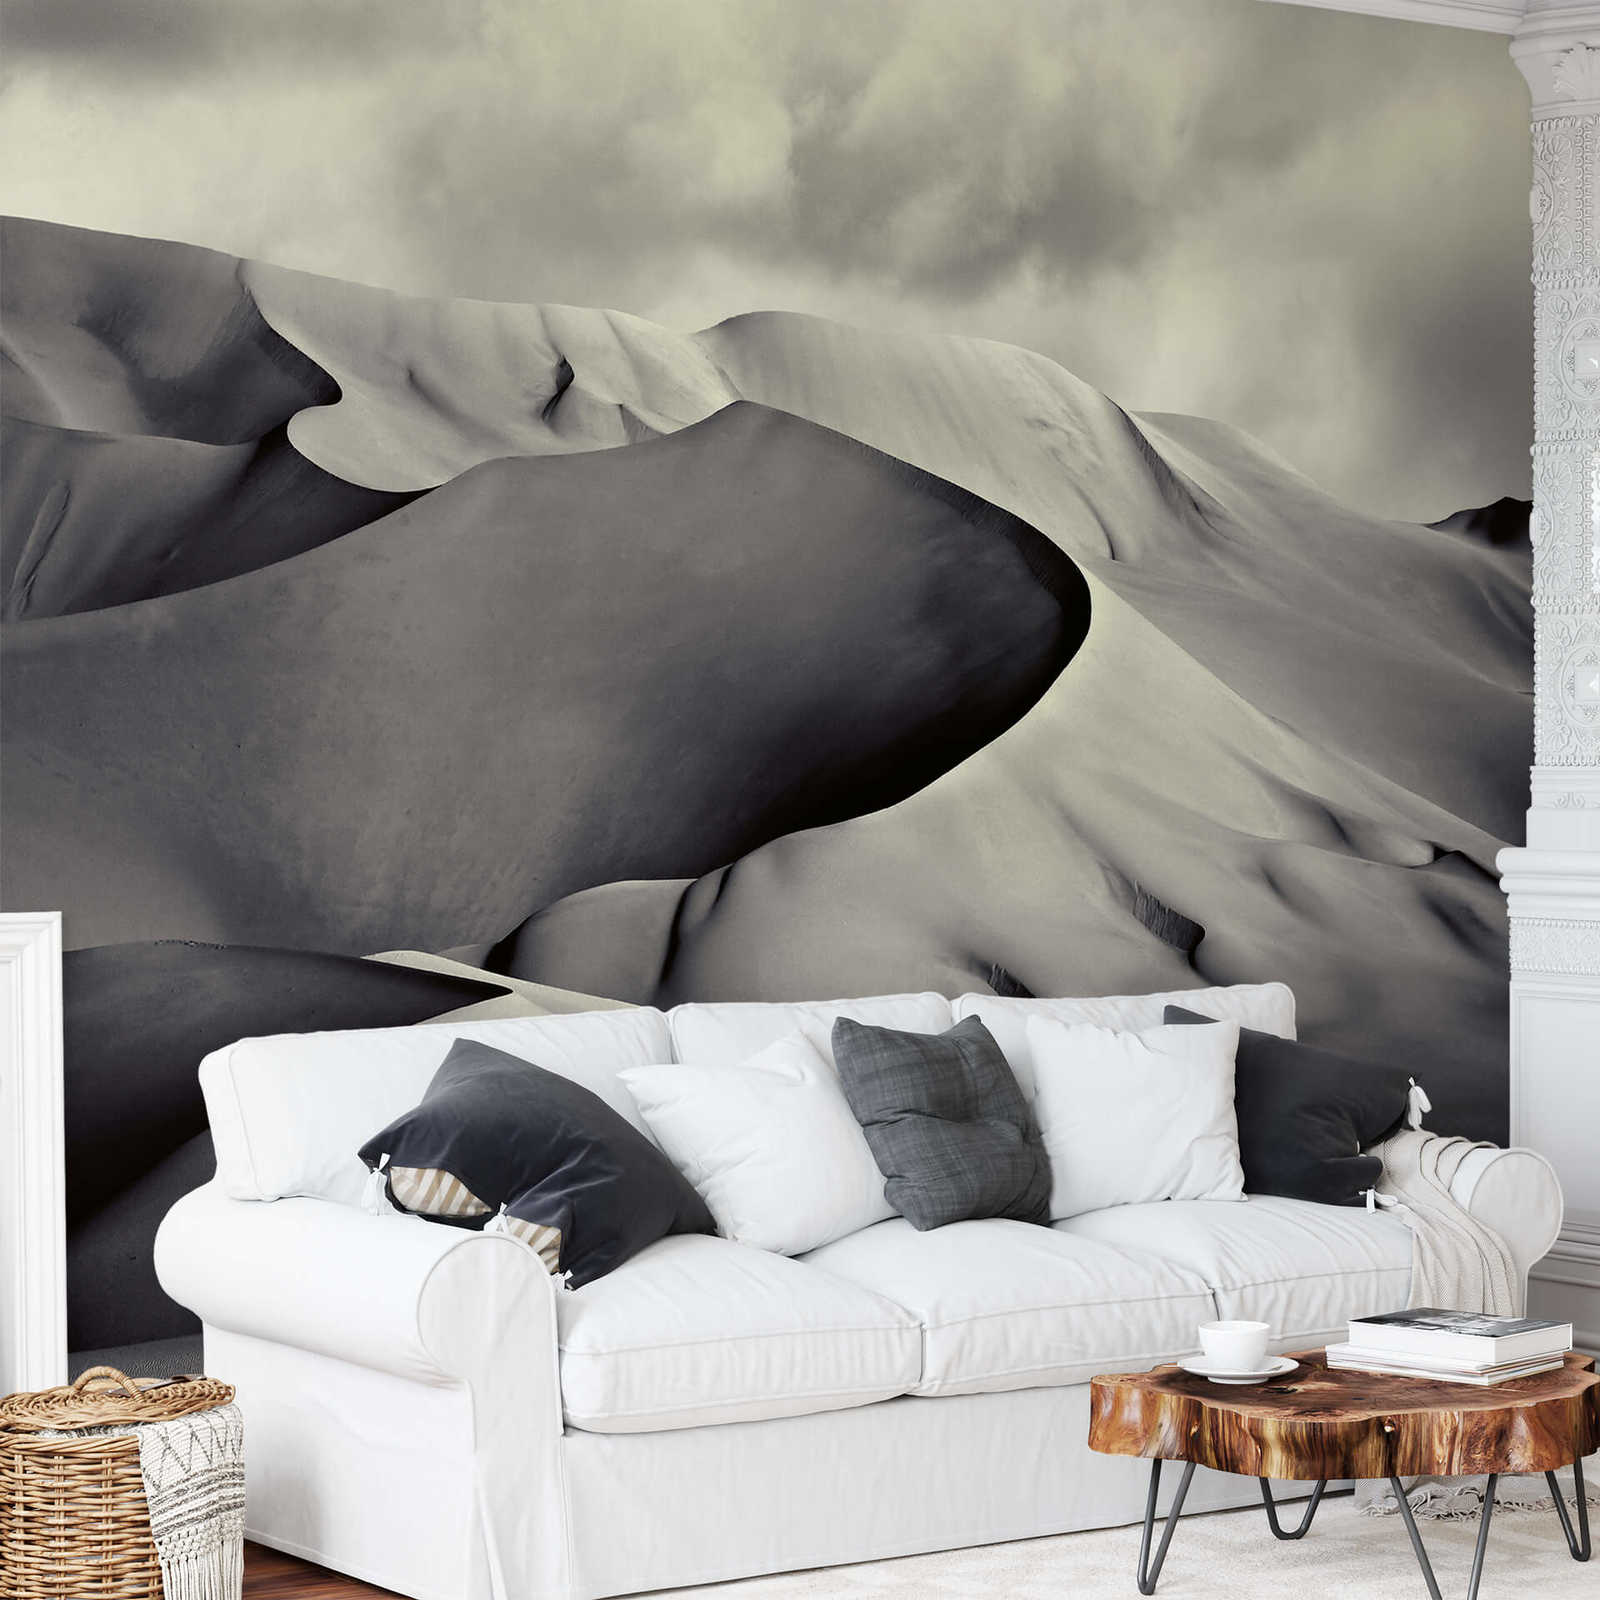             Photo wallpaper desert landscape nature - grey
        